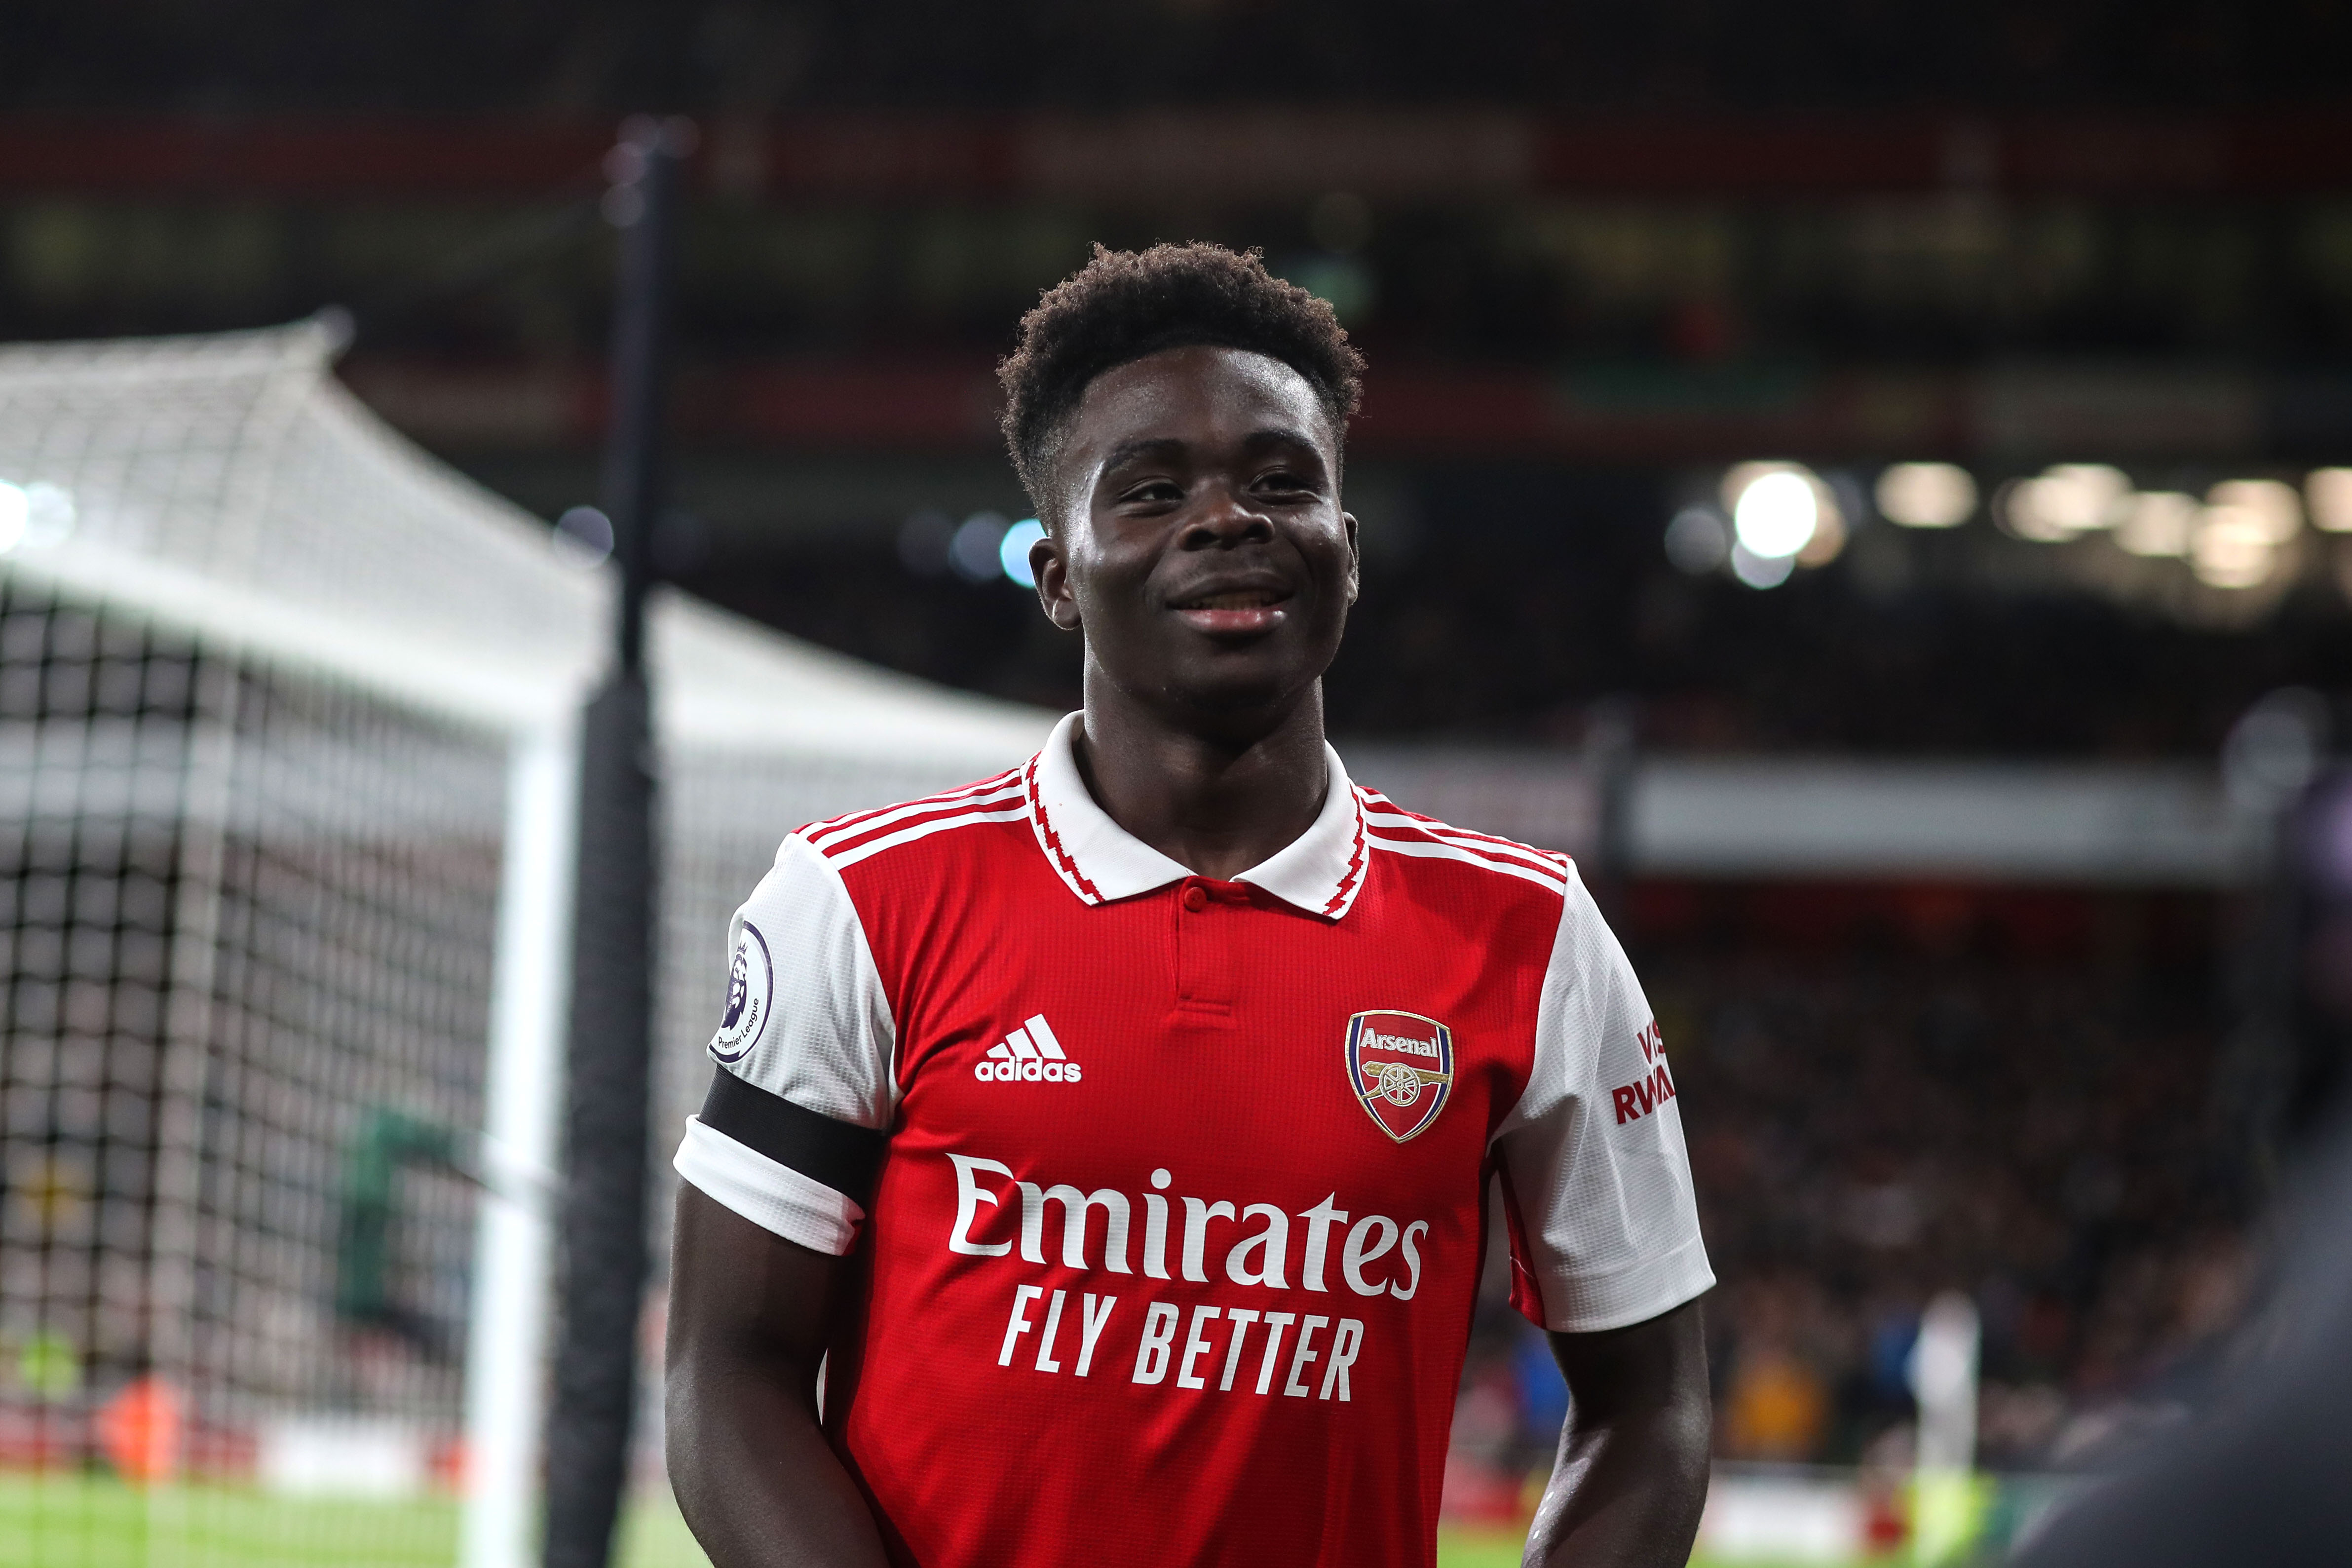 Saka signs for The Arsenal: I'm Really Happy says Bukayo